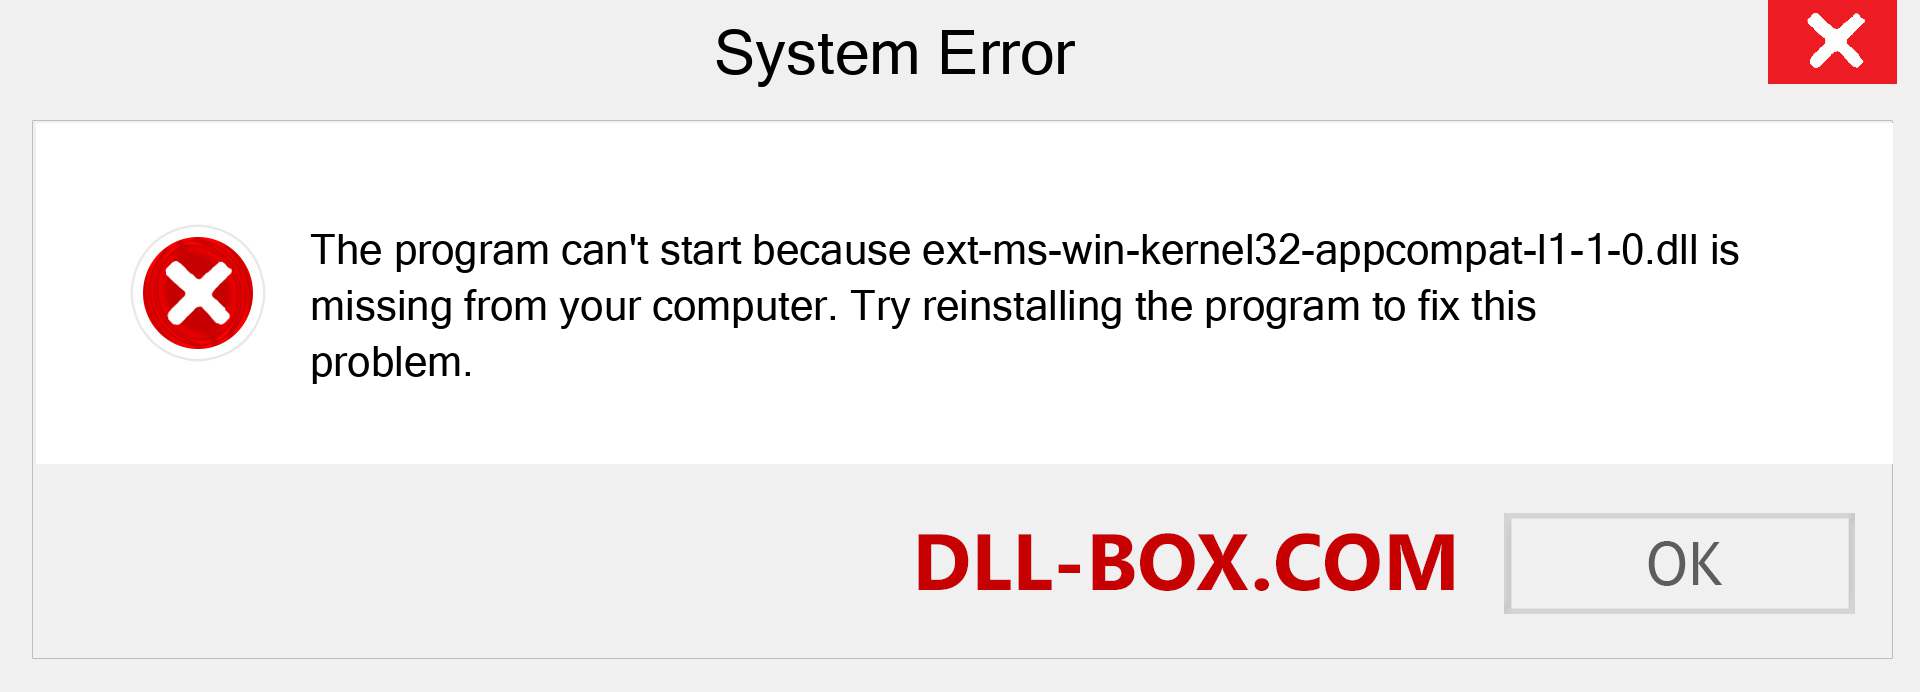  ext-ms-win-kernel32-appcompat-l1-1-0.dll file is missing?. Download for Windows 7, 8, 10 - Fix  ext-ms-win-kernel32-appcompat-l1-1-0 dll Missing Error on Windows, photos, images